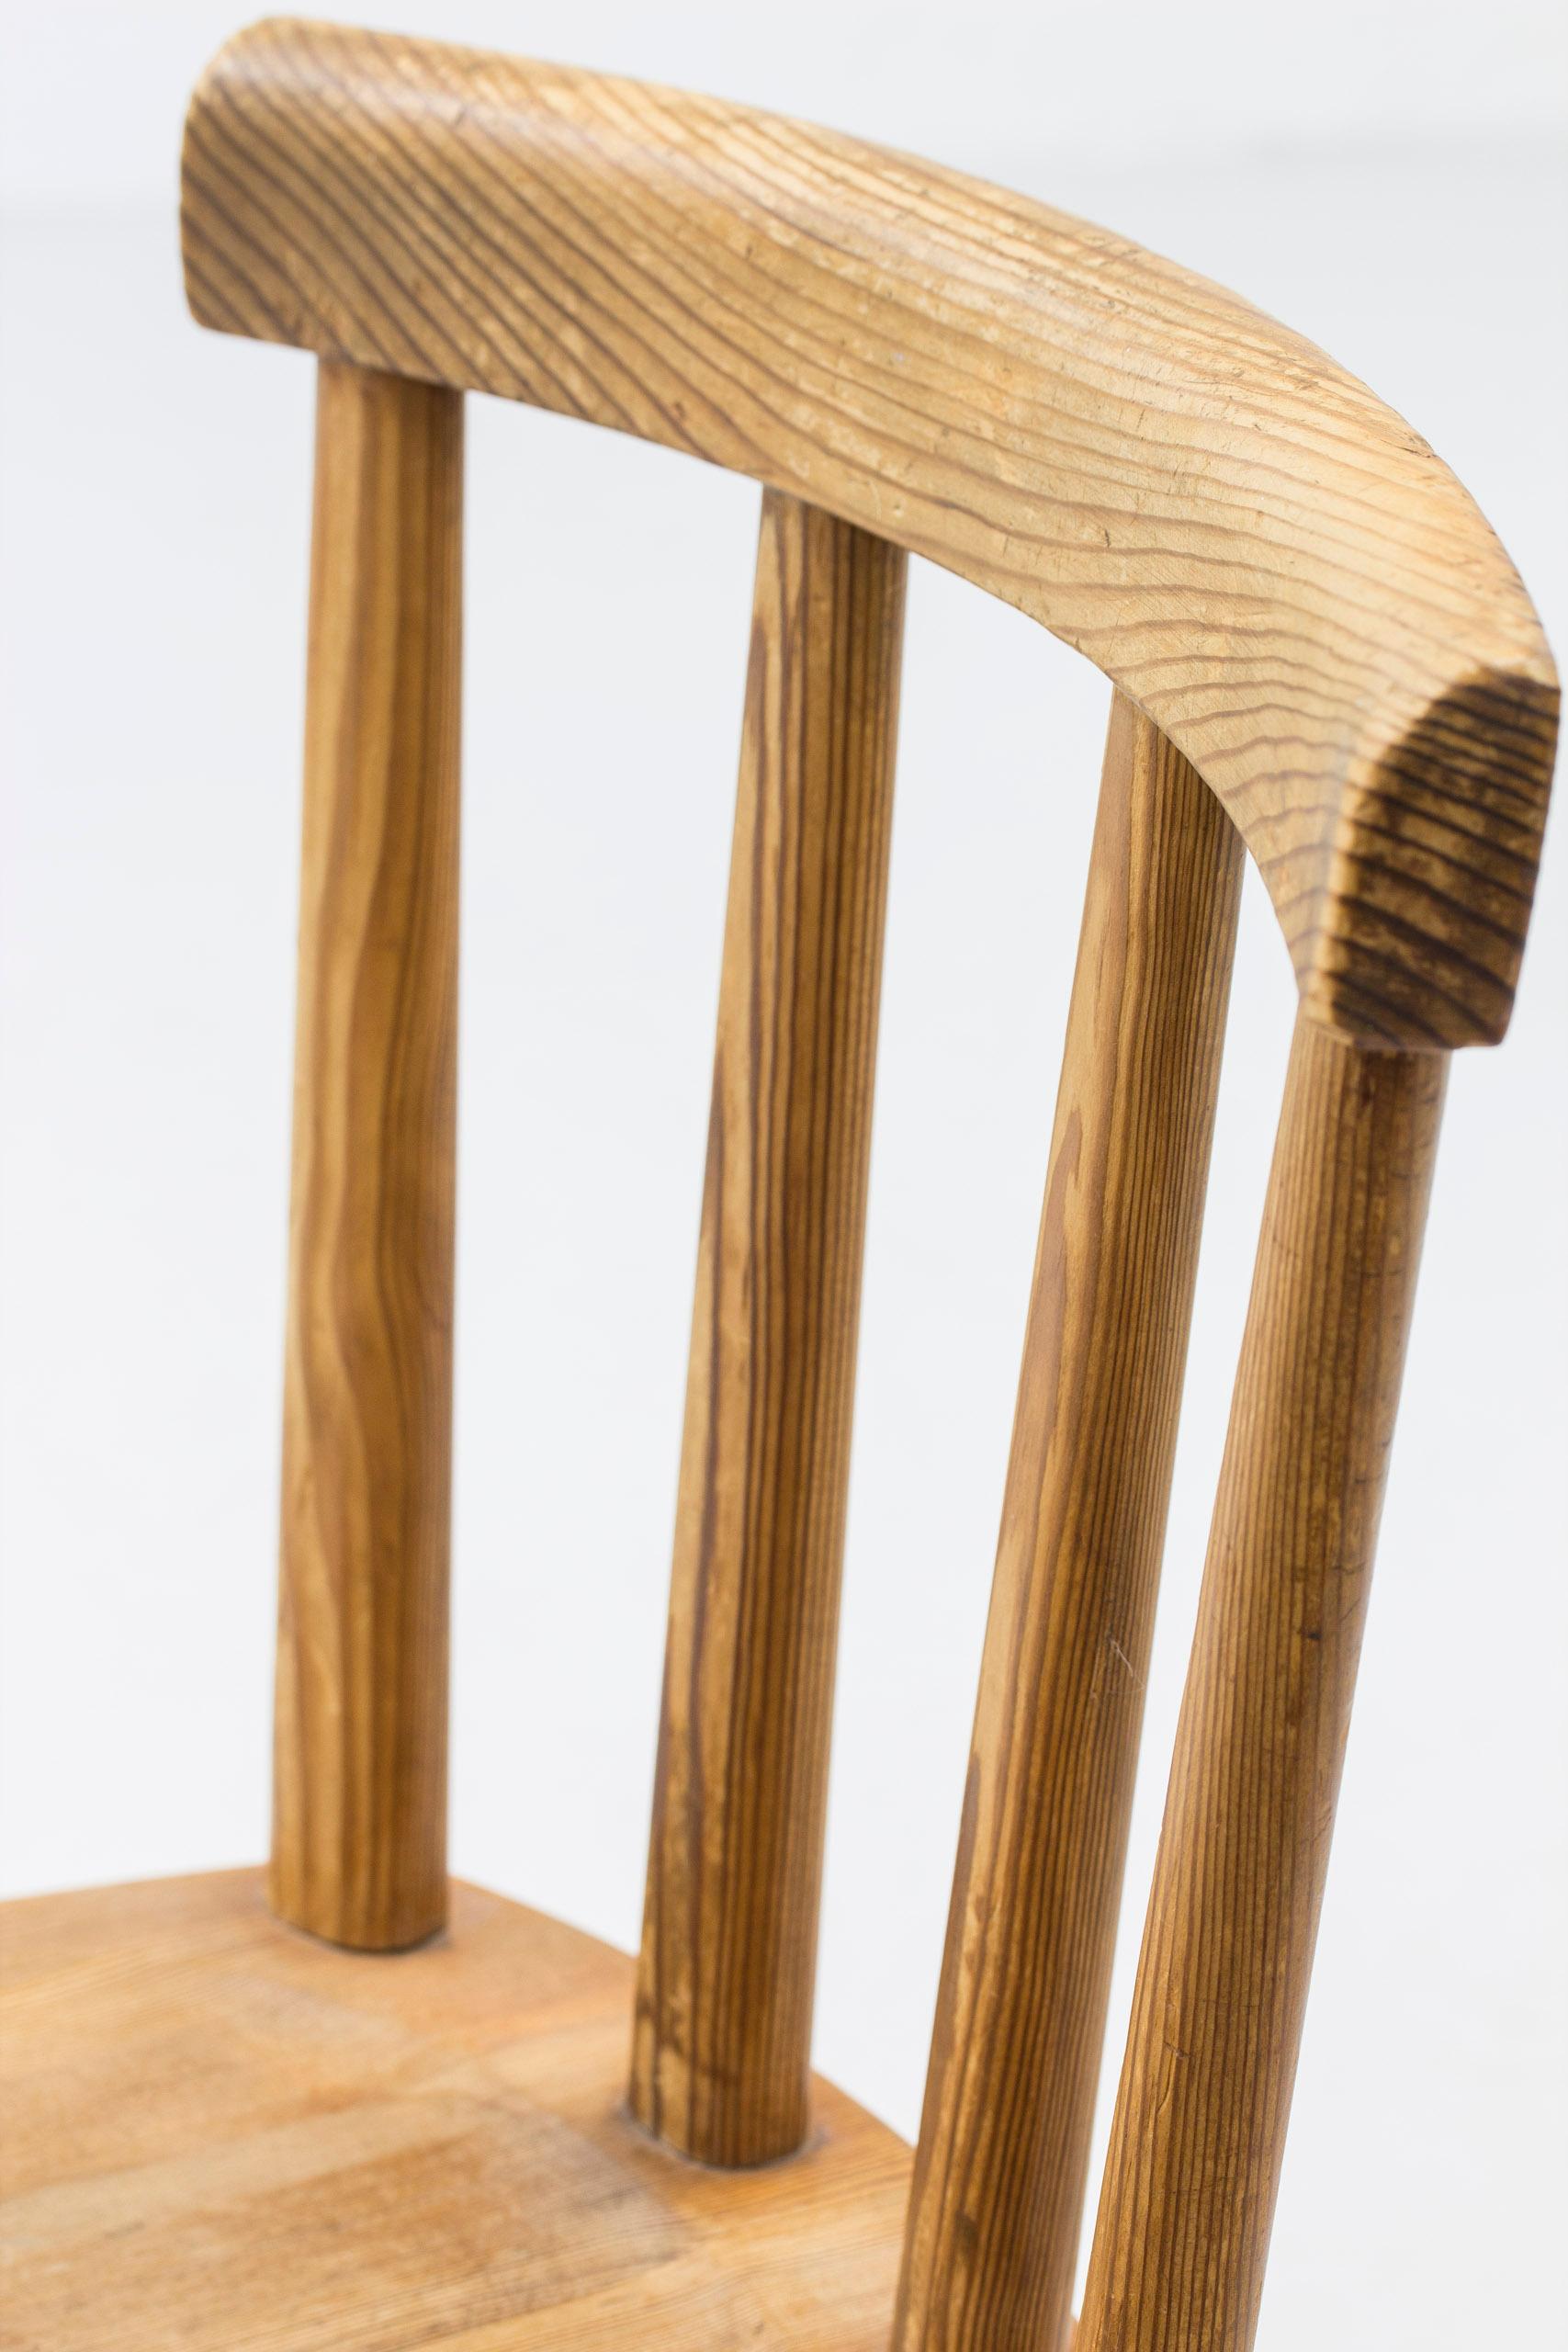 Swedish Utö pine chair by Axel Einar Hjorth, Nordiska Kompaniet, Sportstugemöbel, 1930s